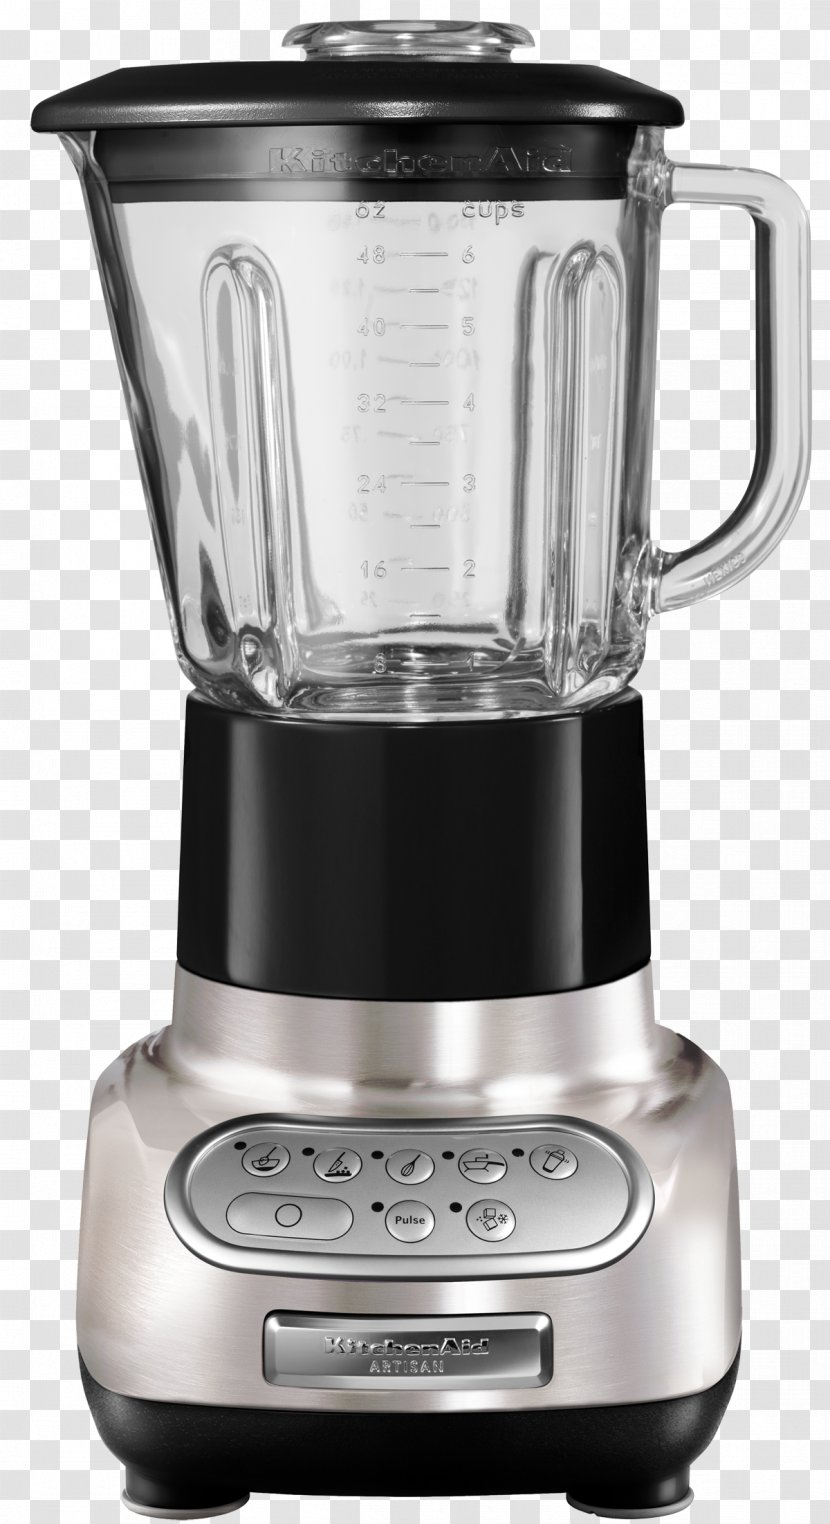 KitchenAid Artisan KSB5553E Blender Mixer KSB1570 - Coffeemaker - Glass Transparent PNG